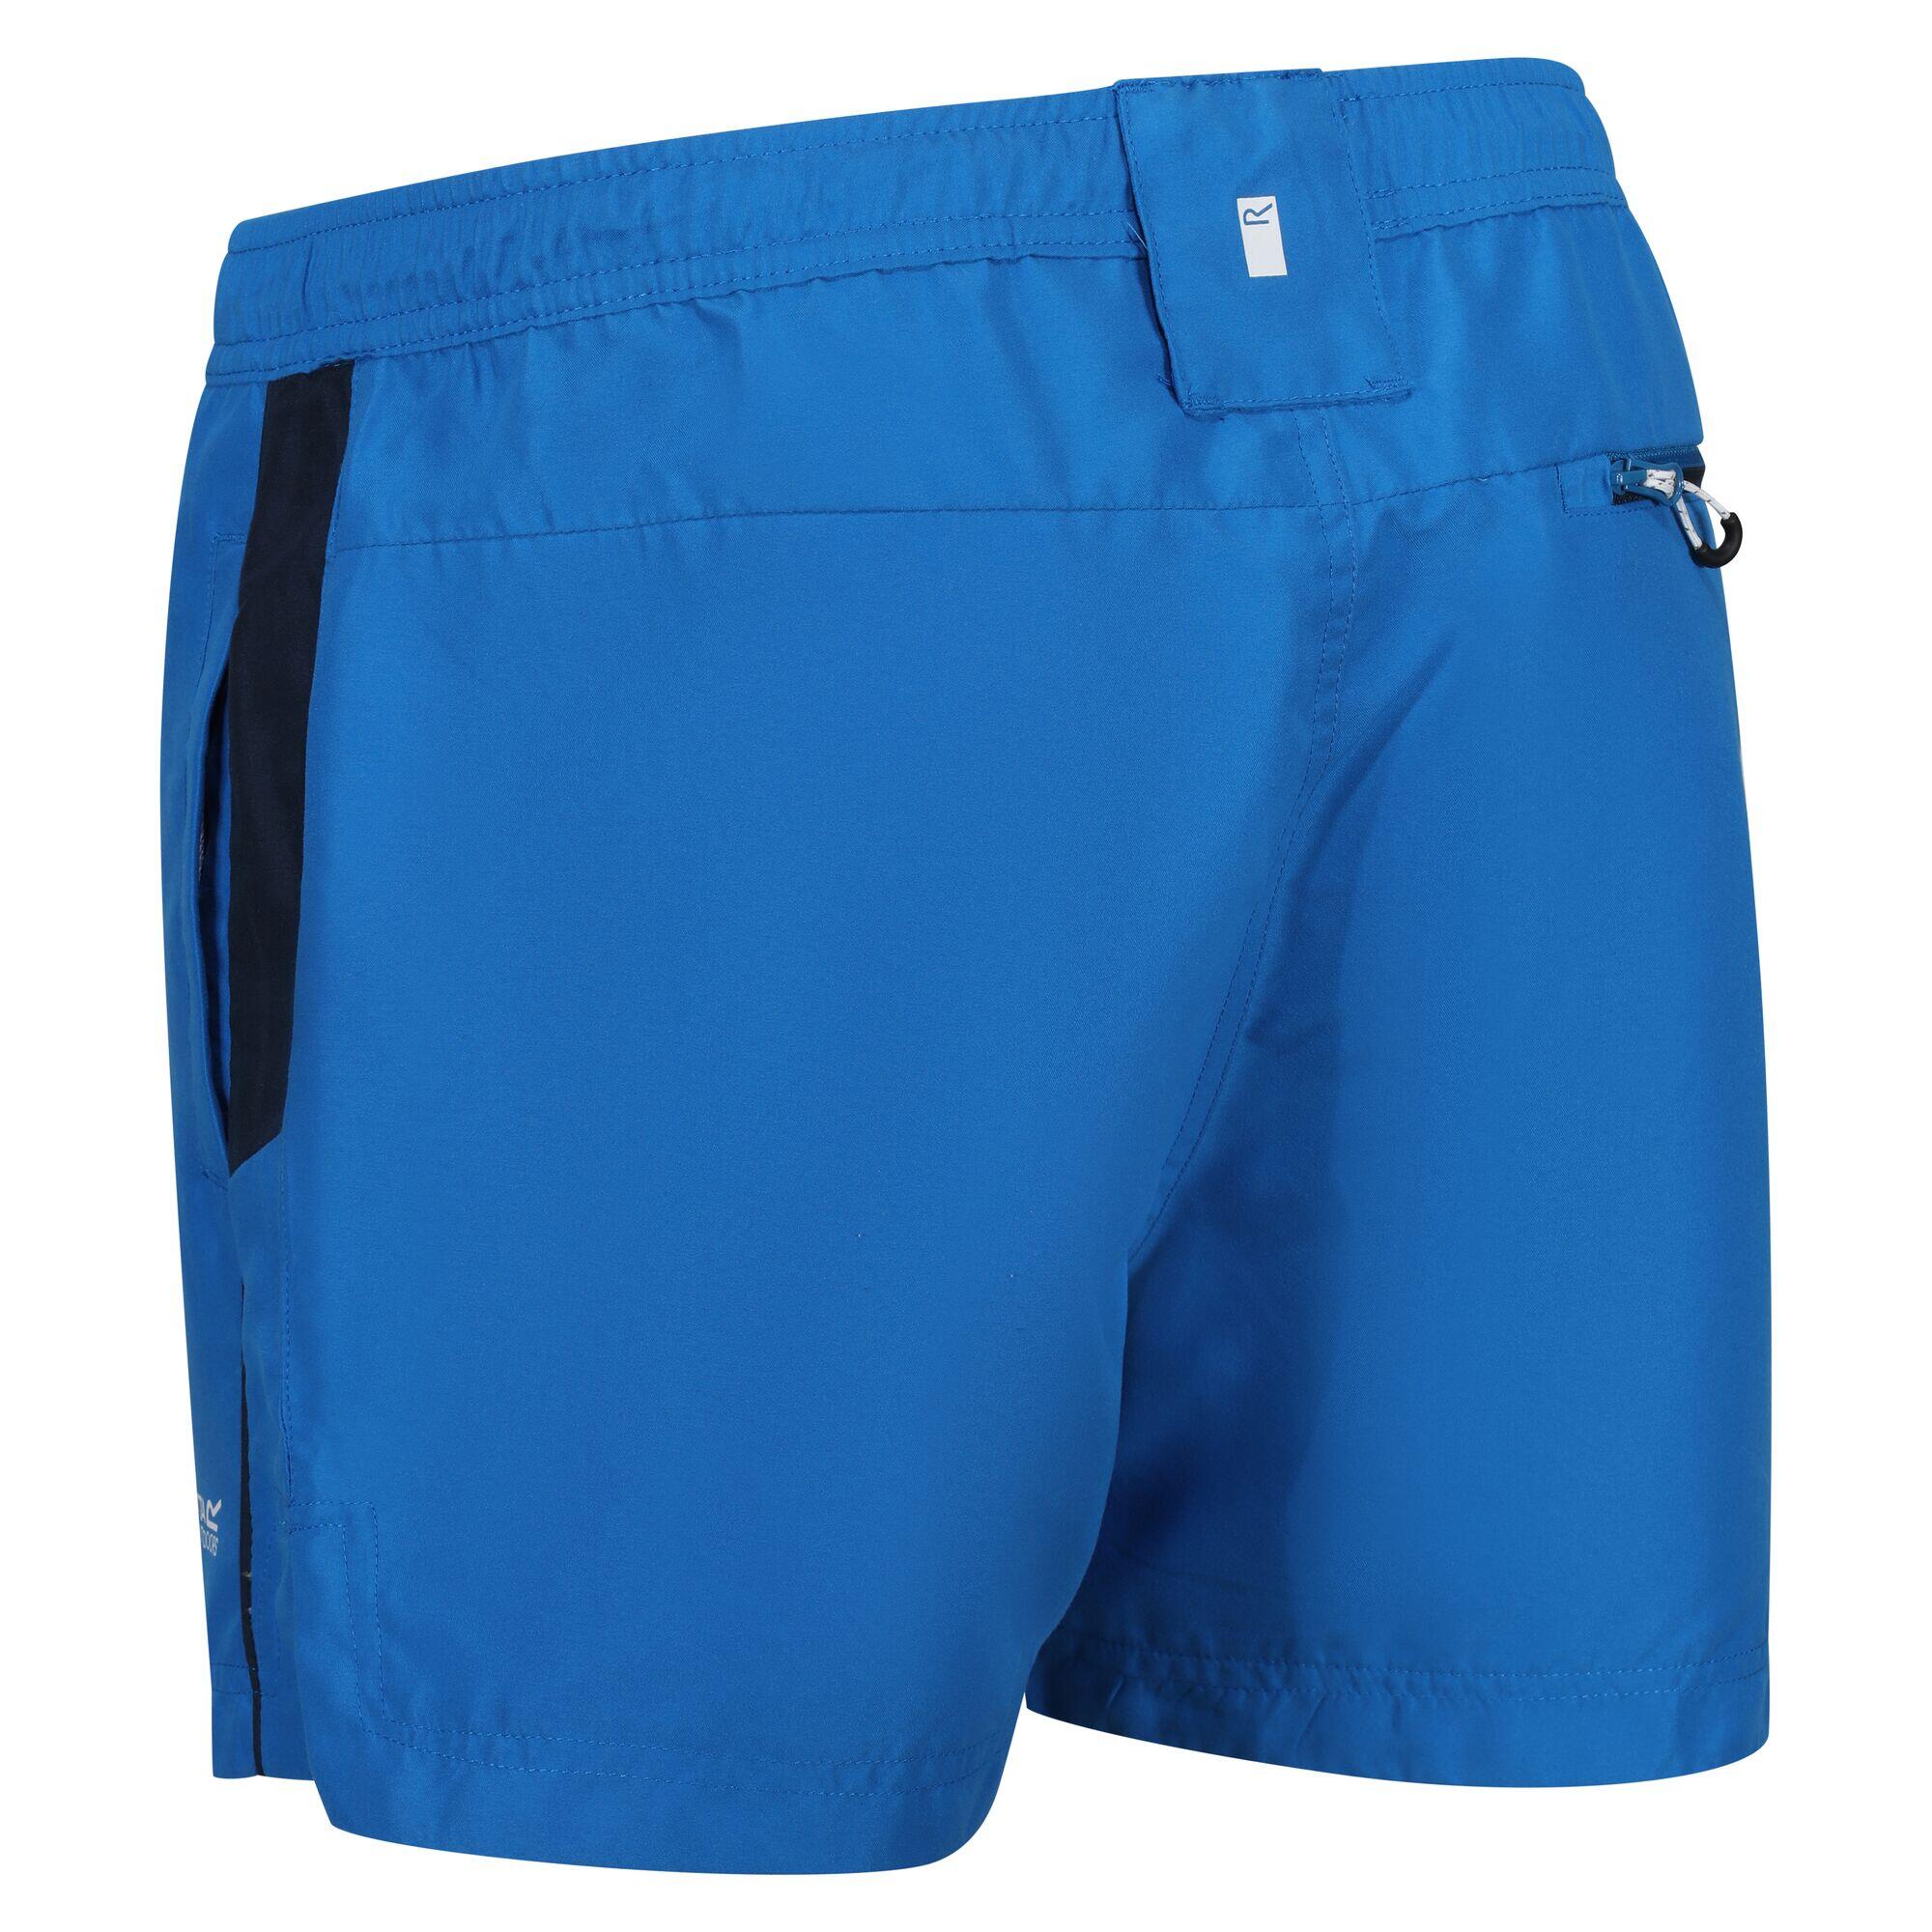 Rehere Men's Swim Shorts - Imperial Blue 5/5